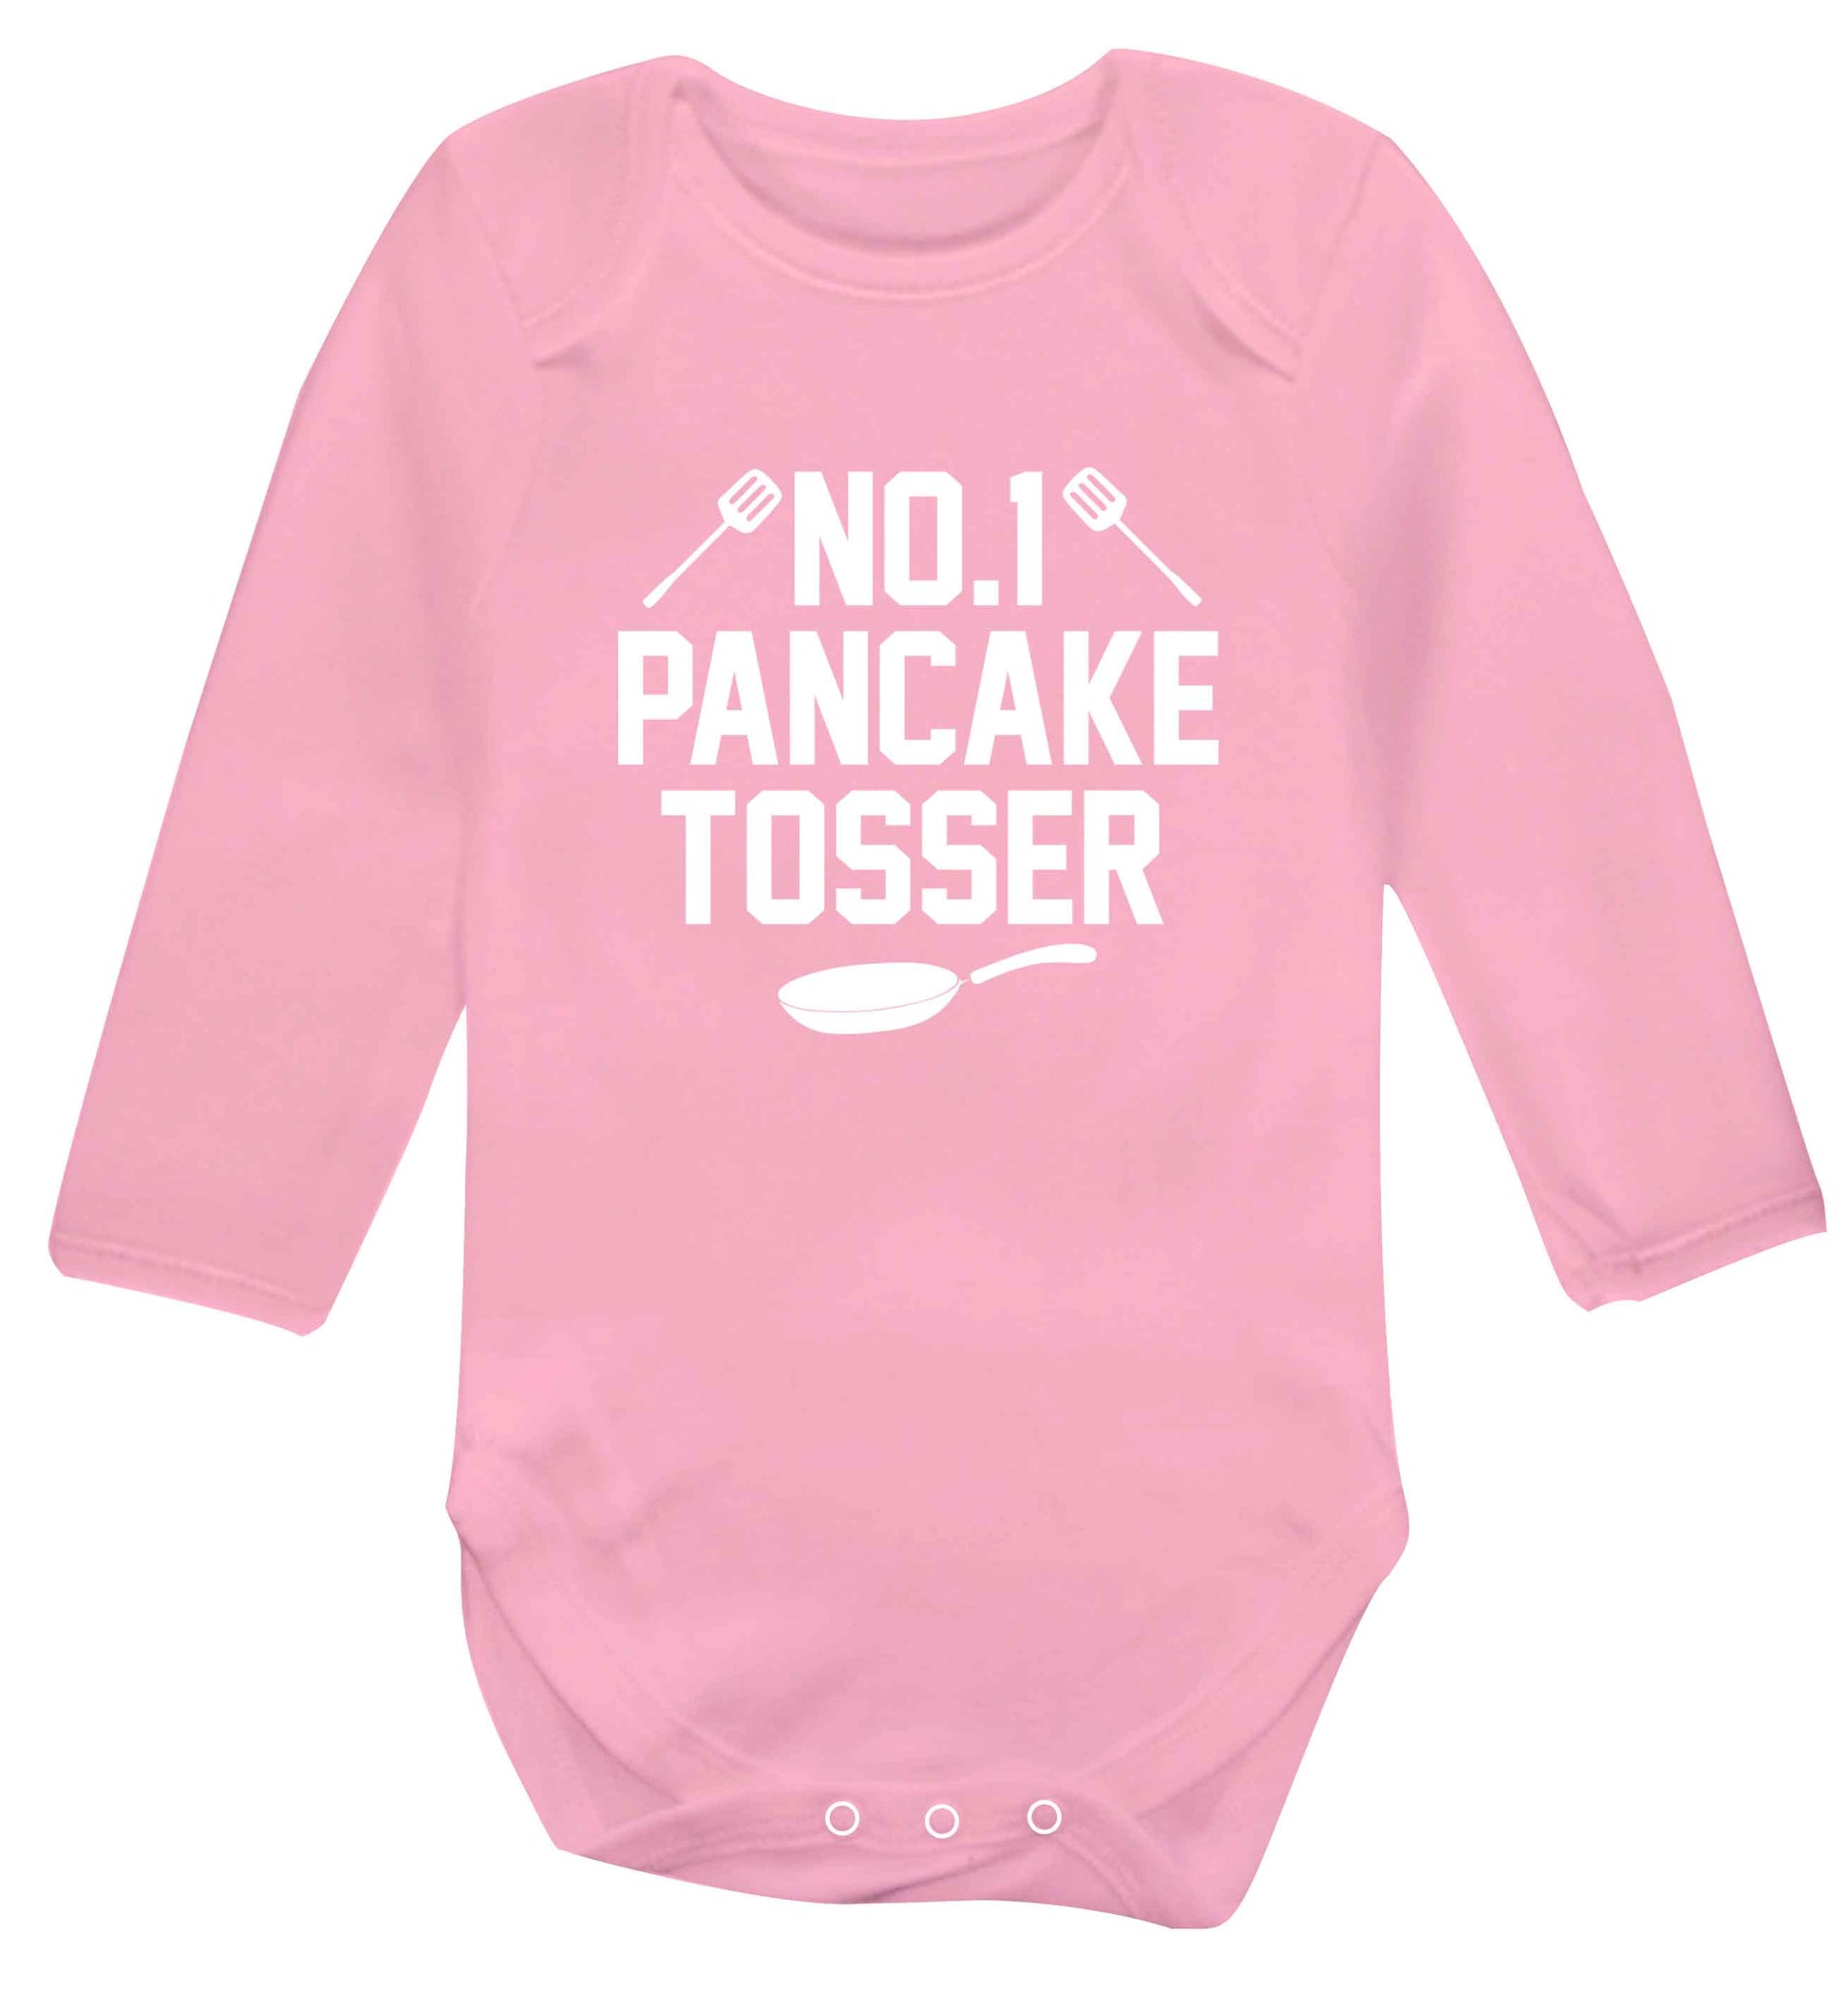 No.1 Pancake tosser baby vest long sleeved pale pink 6-12 months